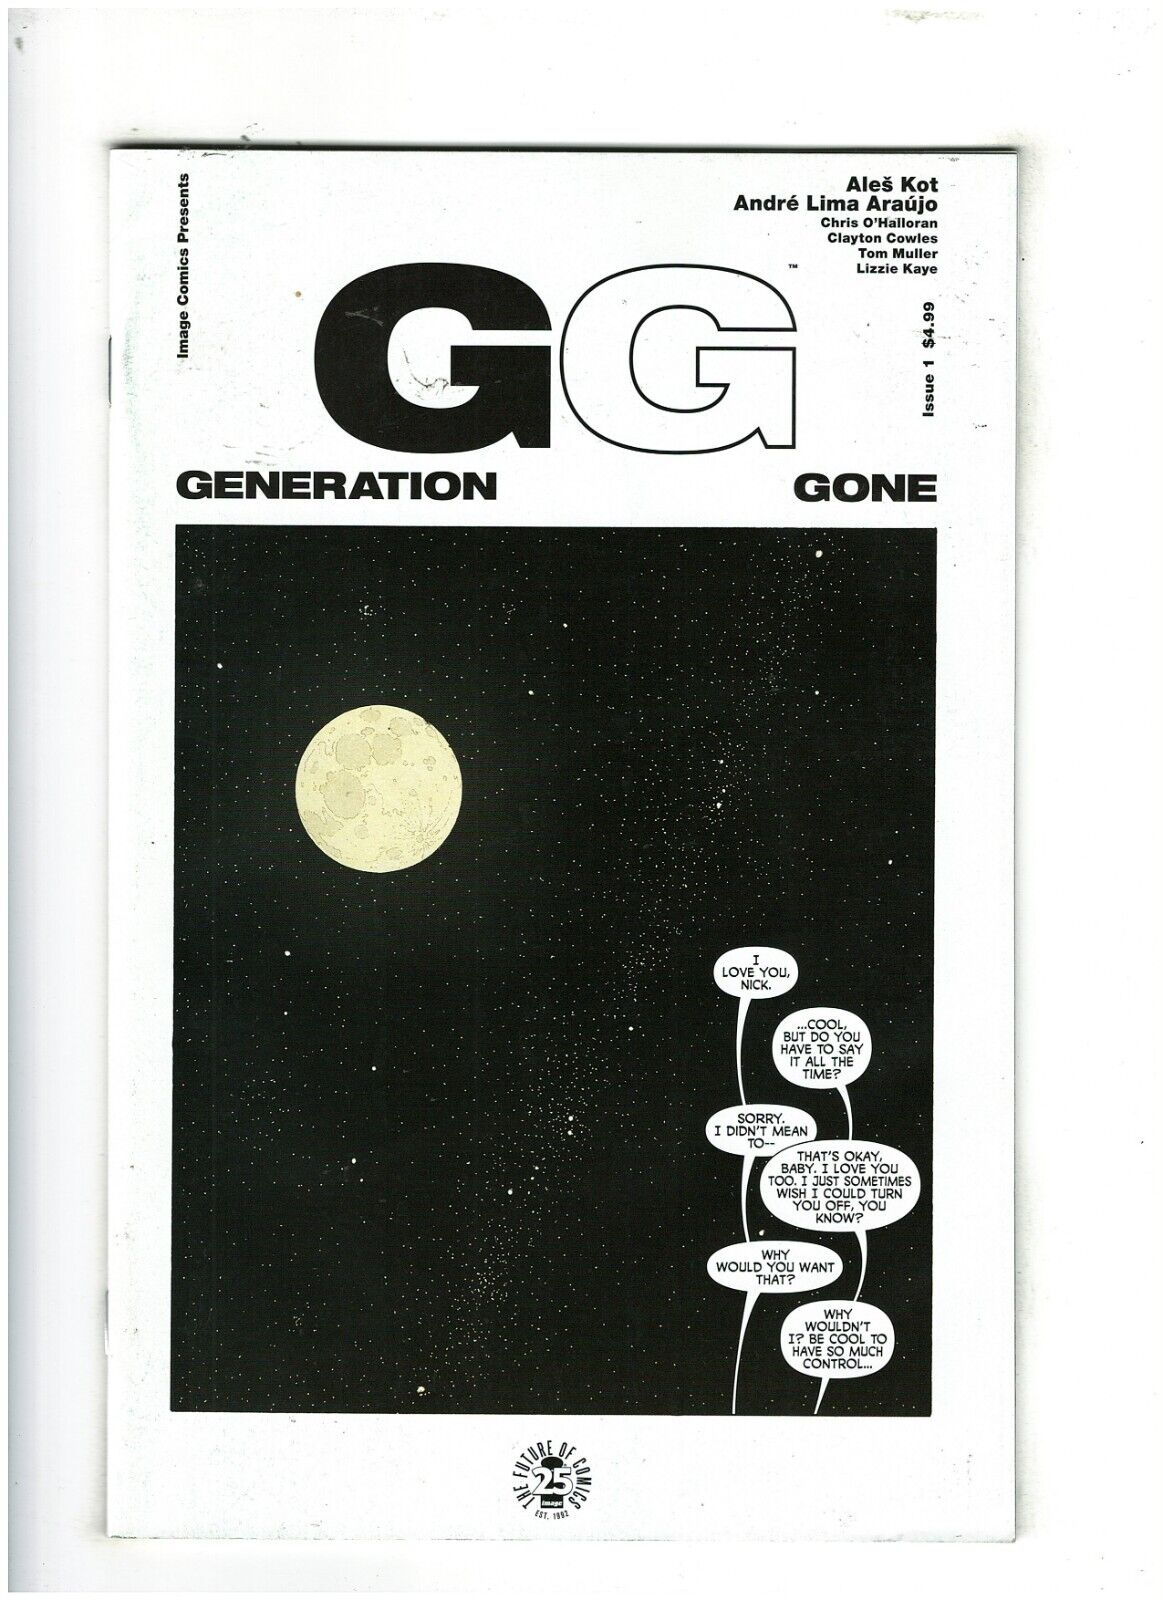 Generation Gone #1 VF/NM 9.0 Image Comics 2017 Ales Kot